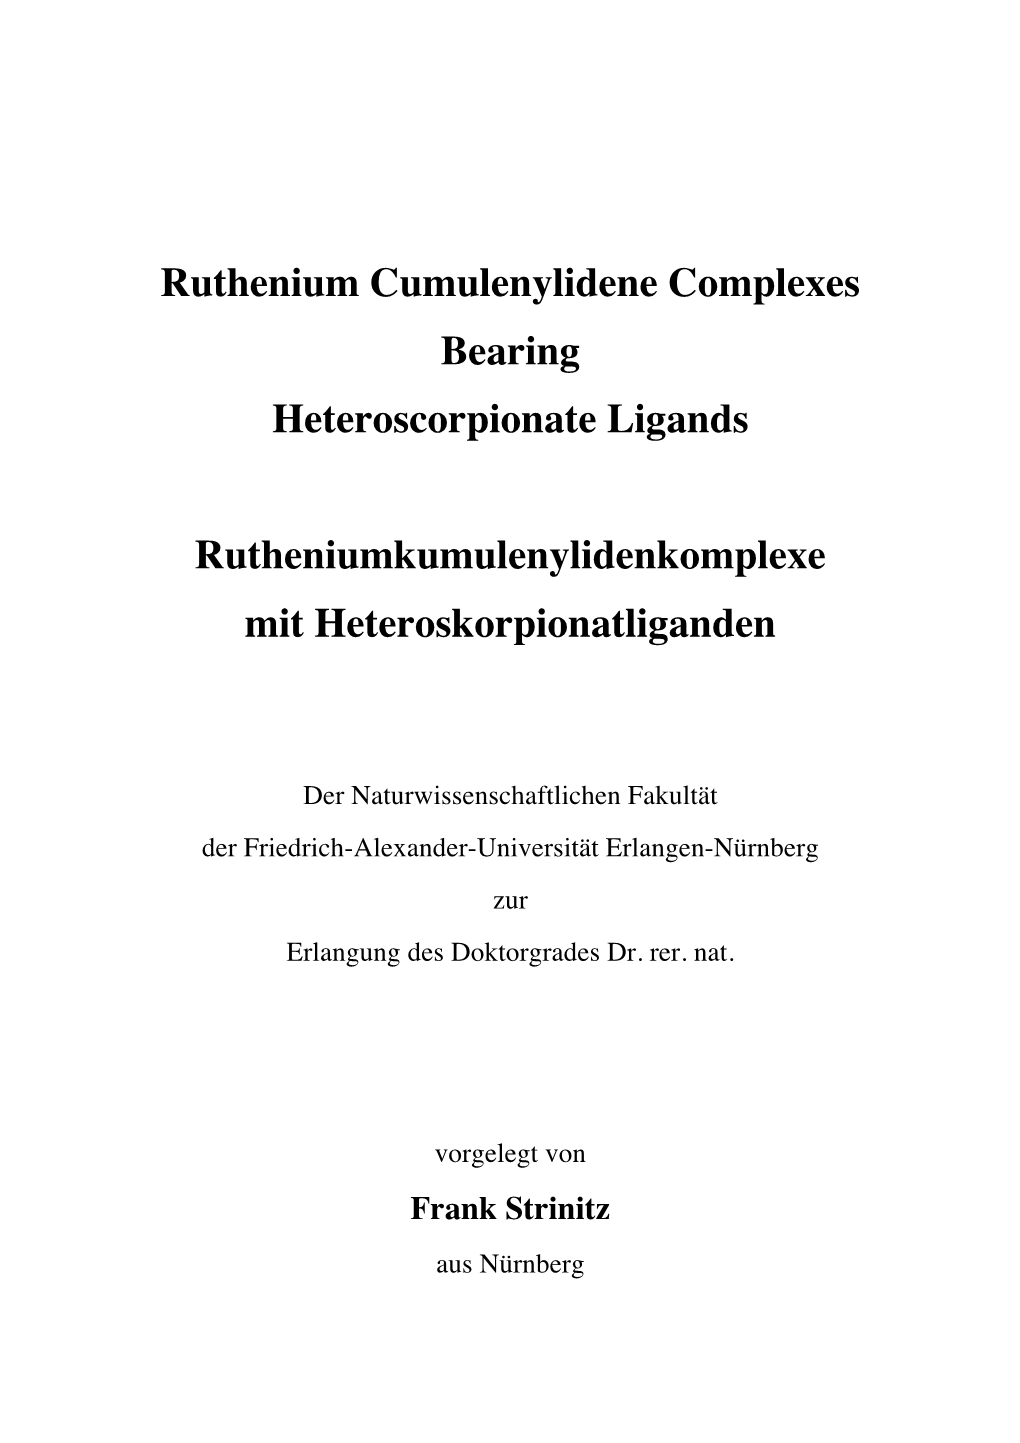 Ruthenium Cumulenylidene Complexes Bearing Heteroscorpionate Ligands